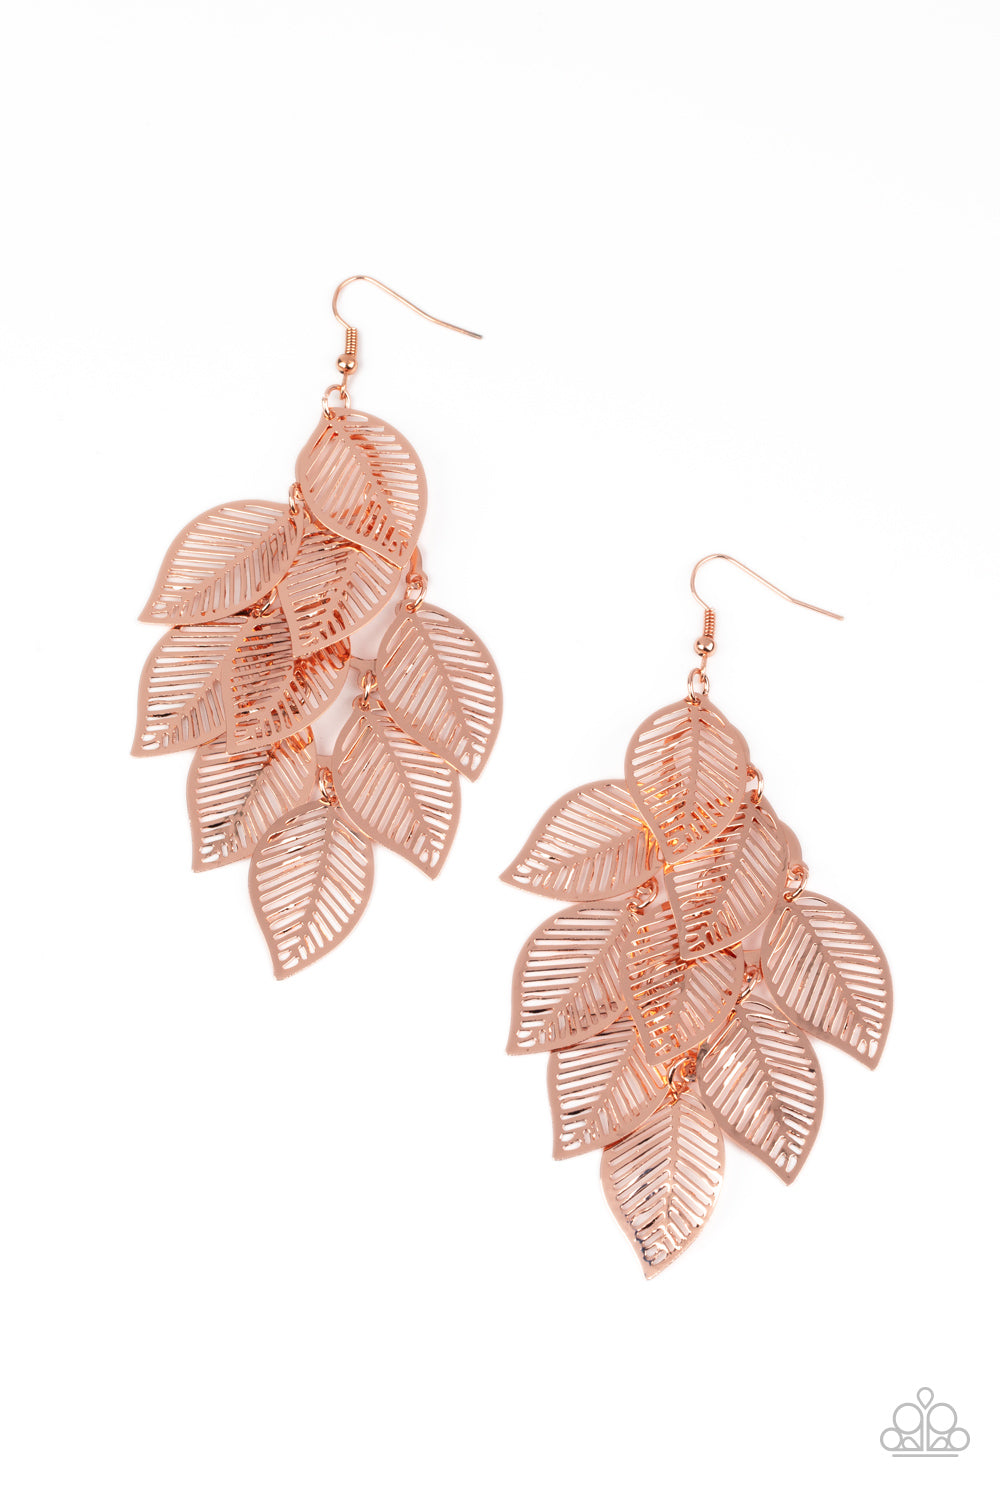 Limitlessly Leafy - Copper earring 2042